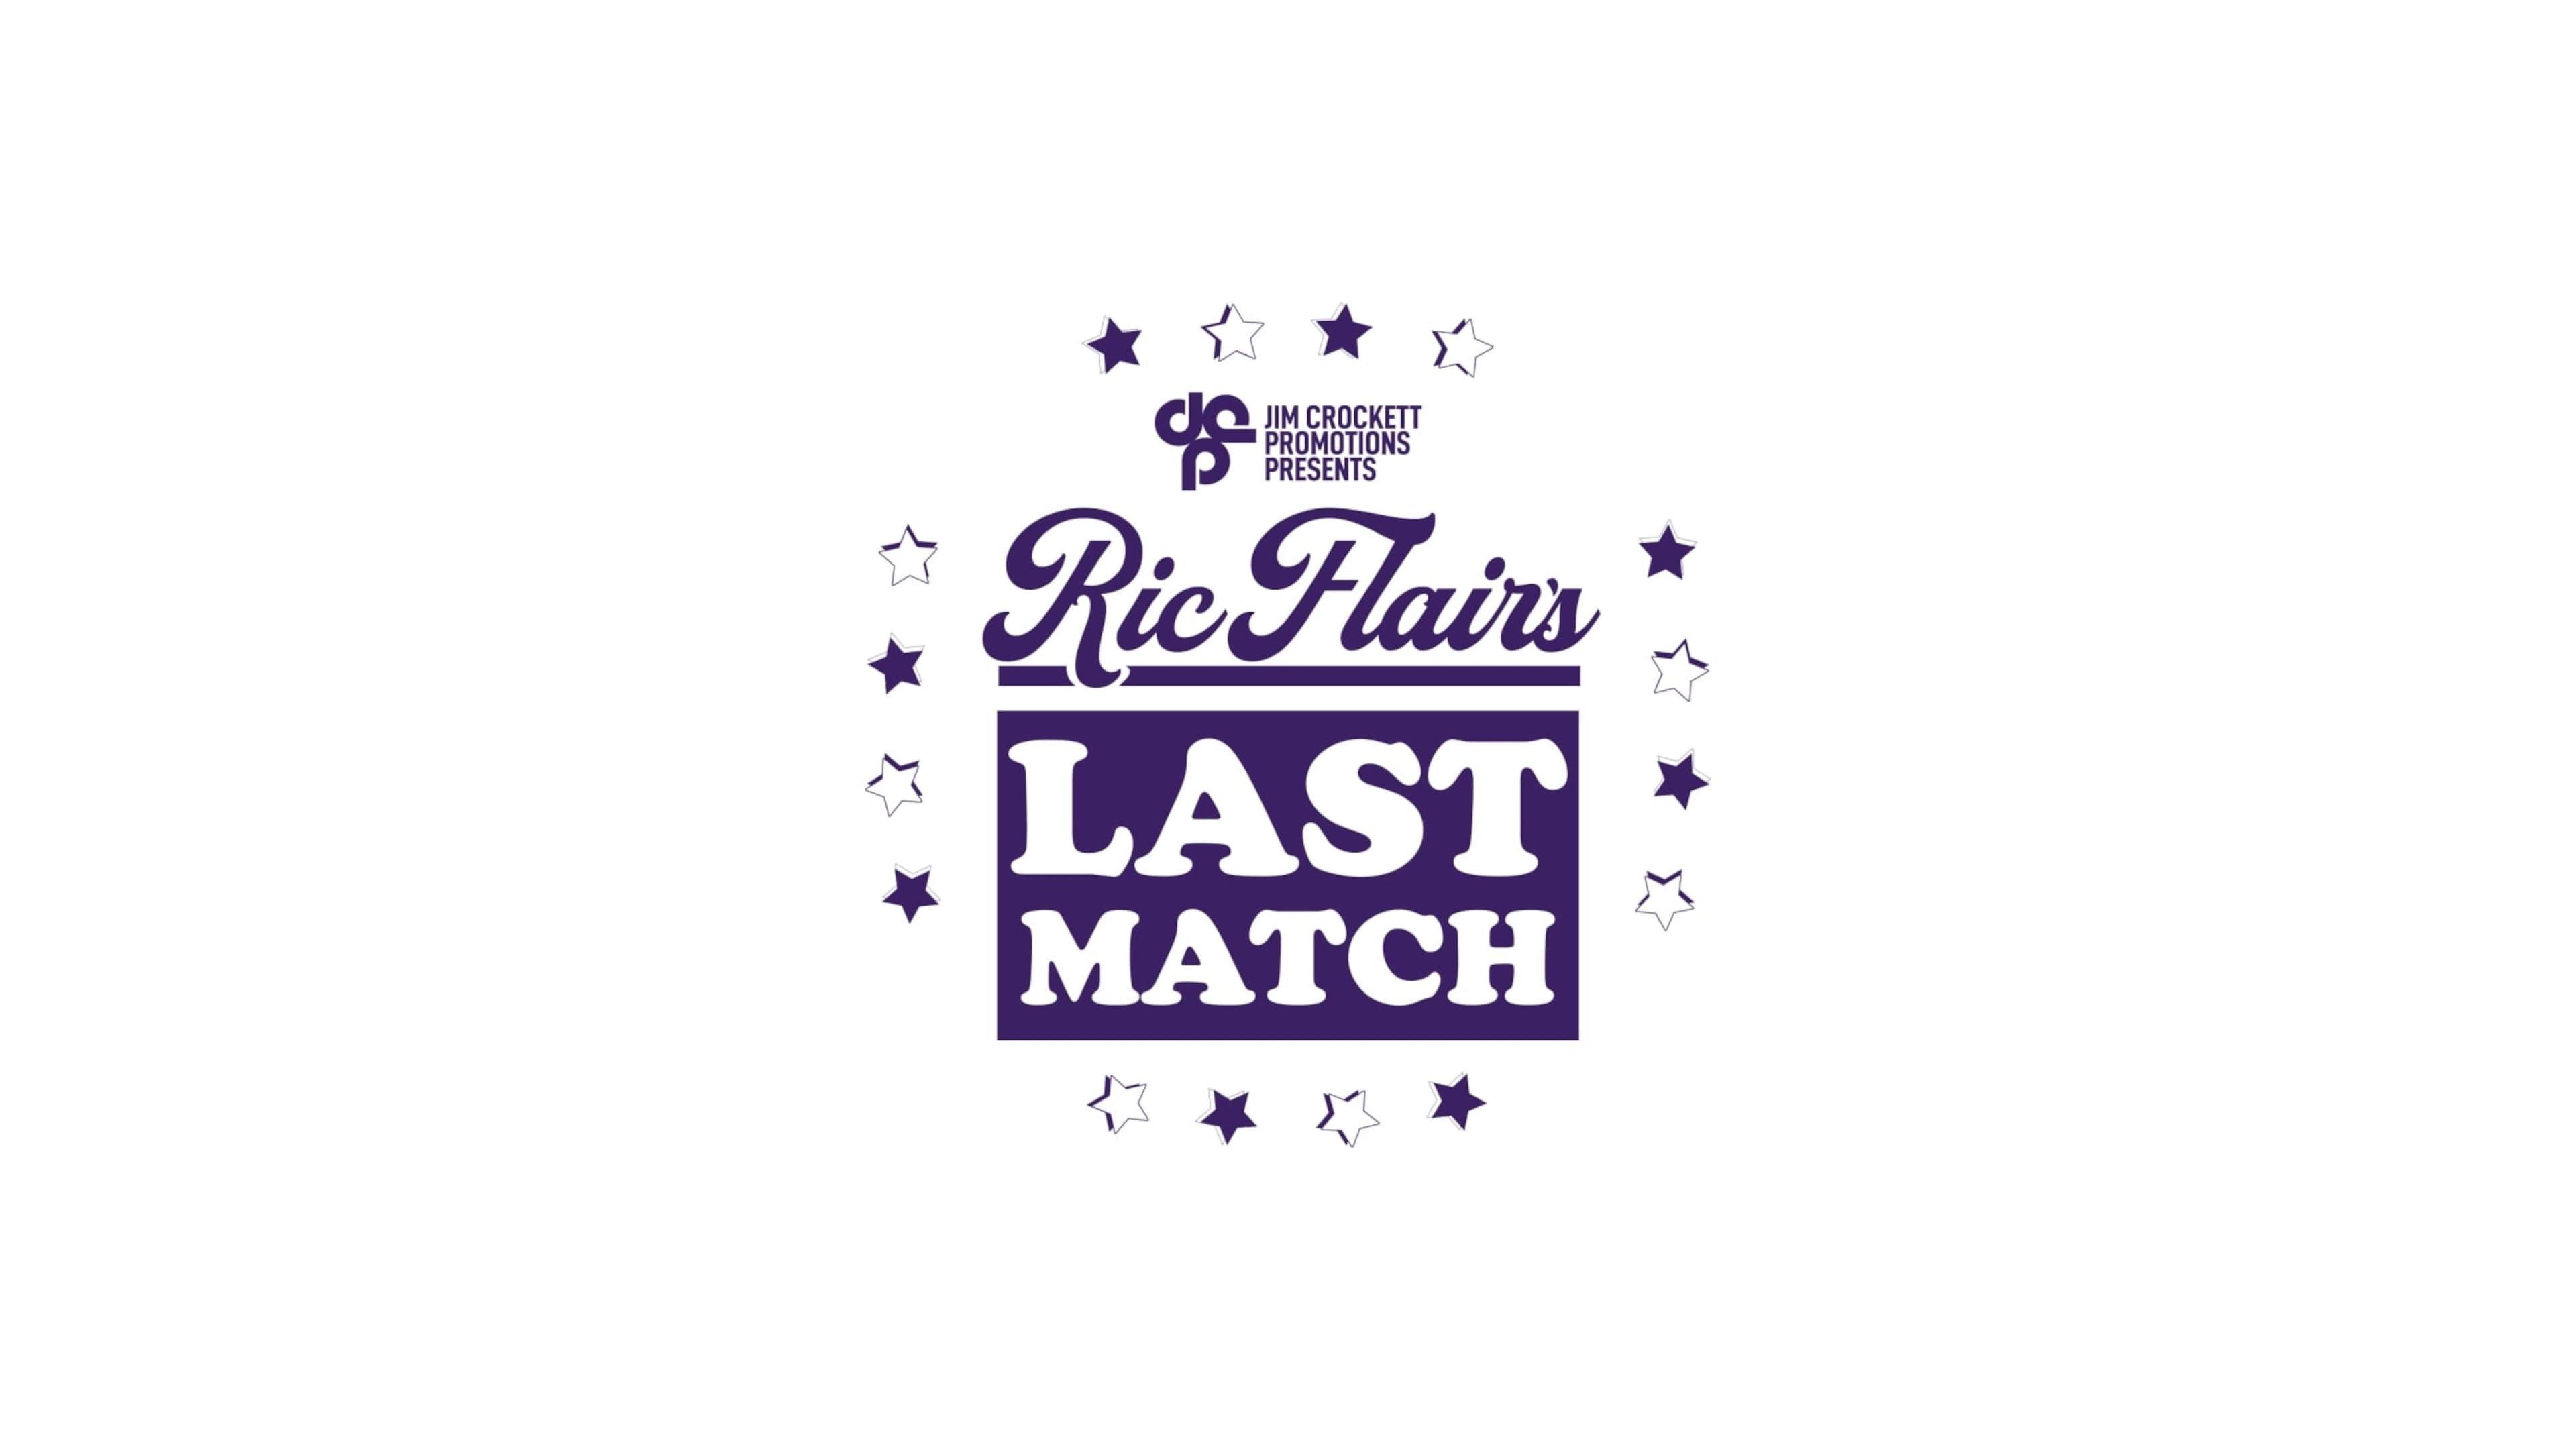 Jim Crockett Promotions: Ric Flair's Last Match backdrop